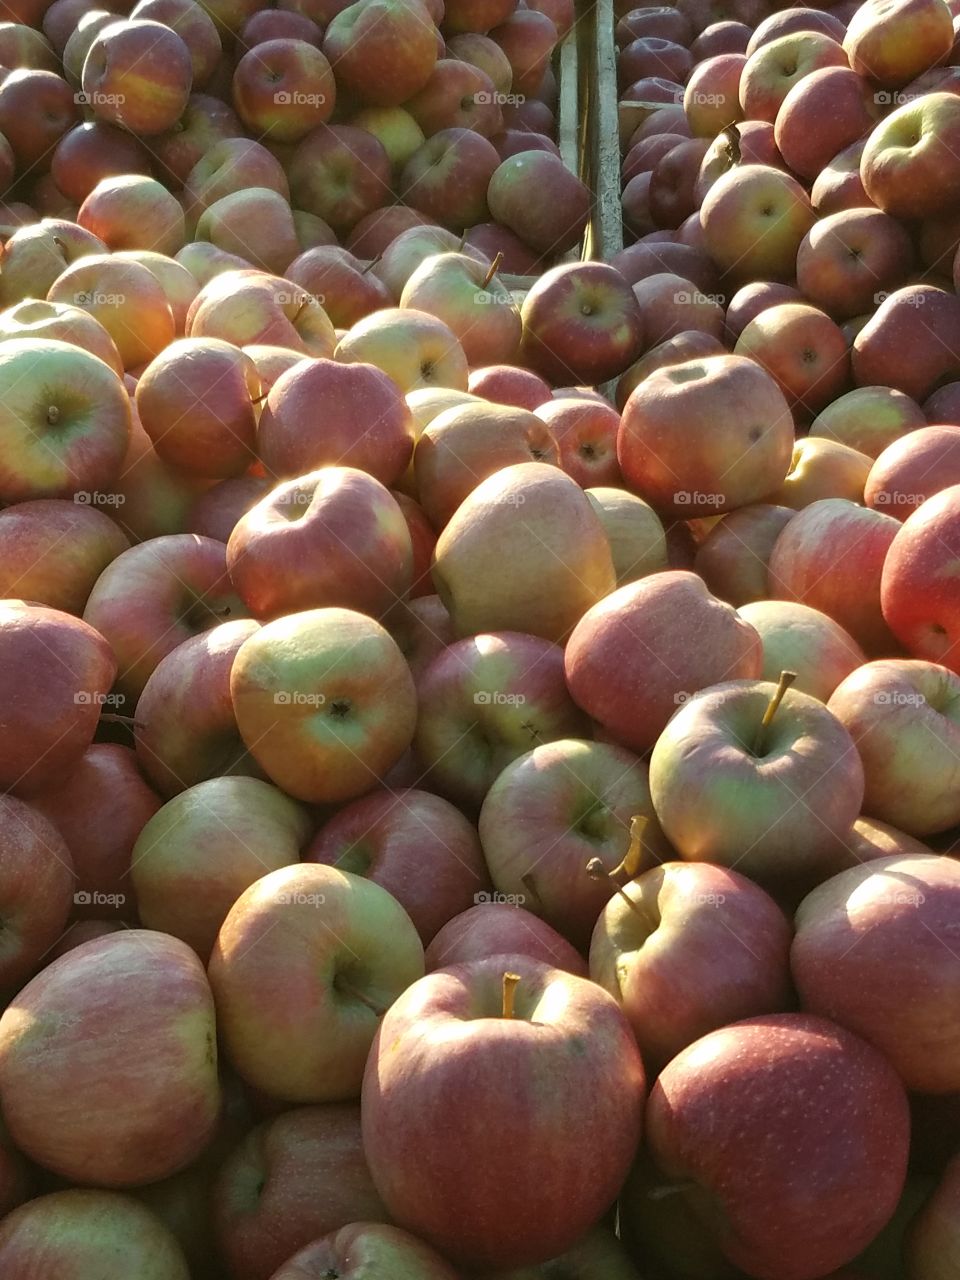 Apples in sunshine